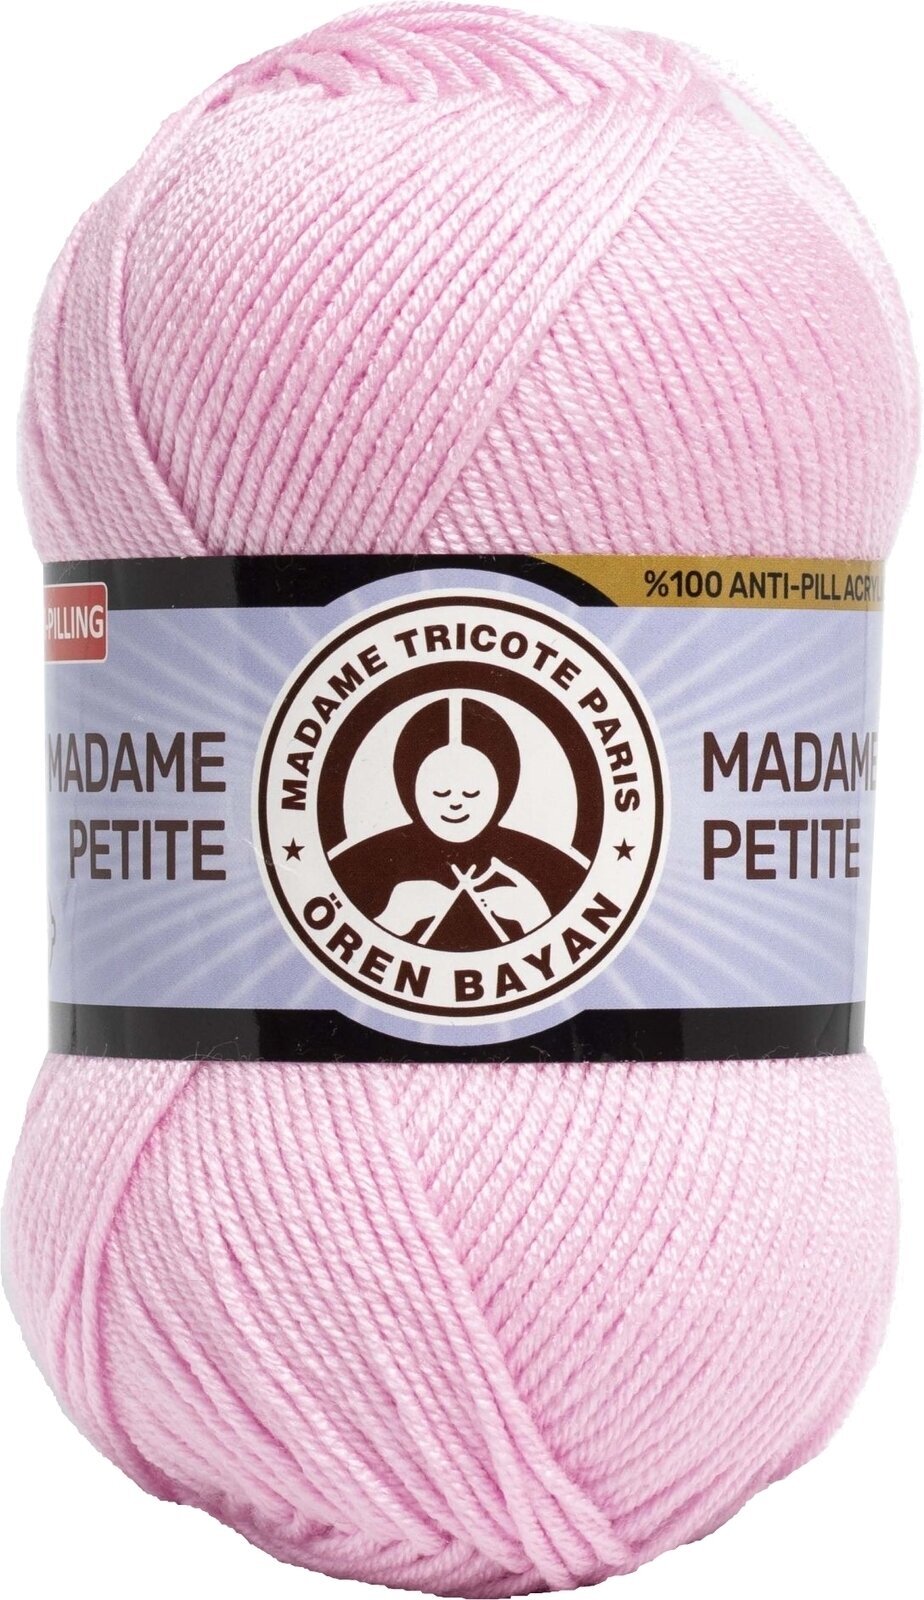 Pletacia priadza Madame Tricote Paris Madame Petite 3848 93 Pletacia priadza